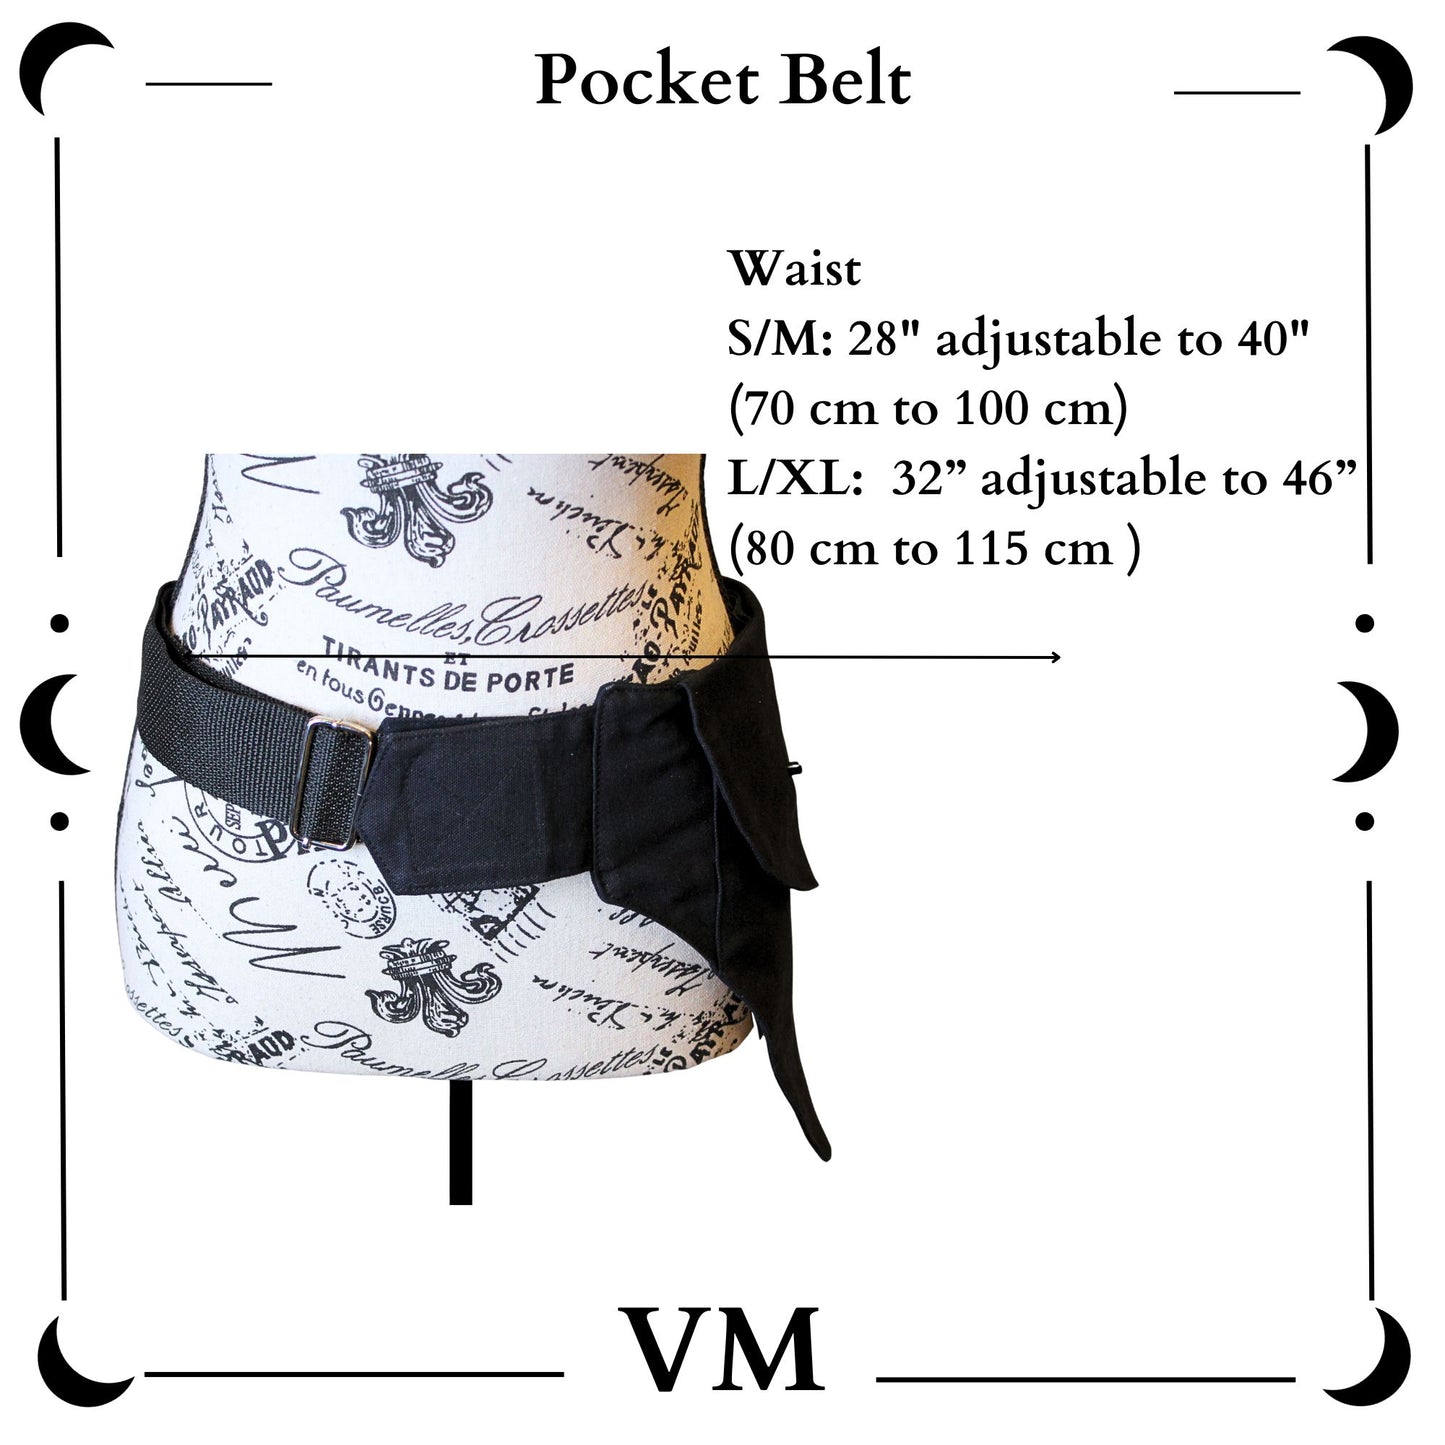 The VM Pocket Belt